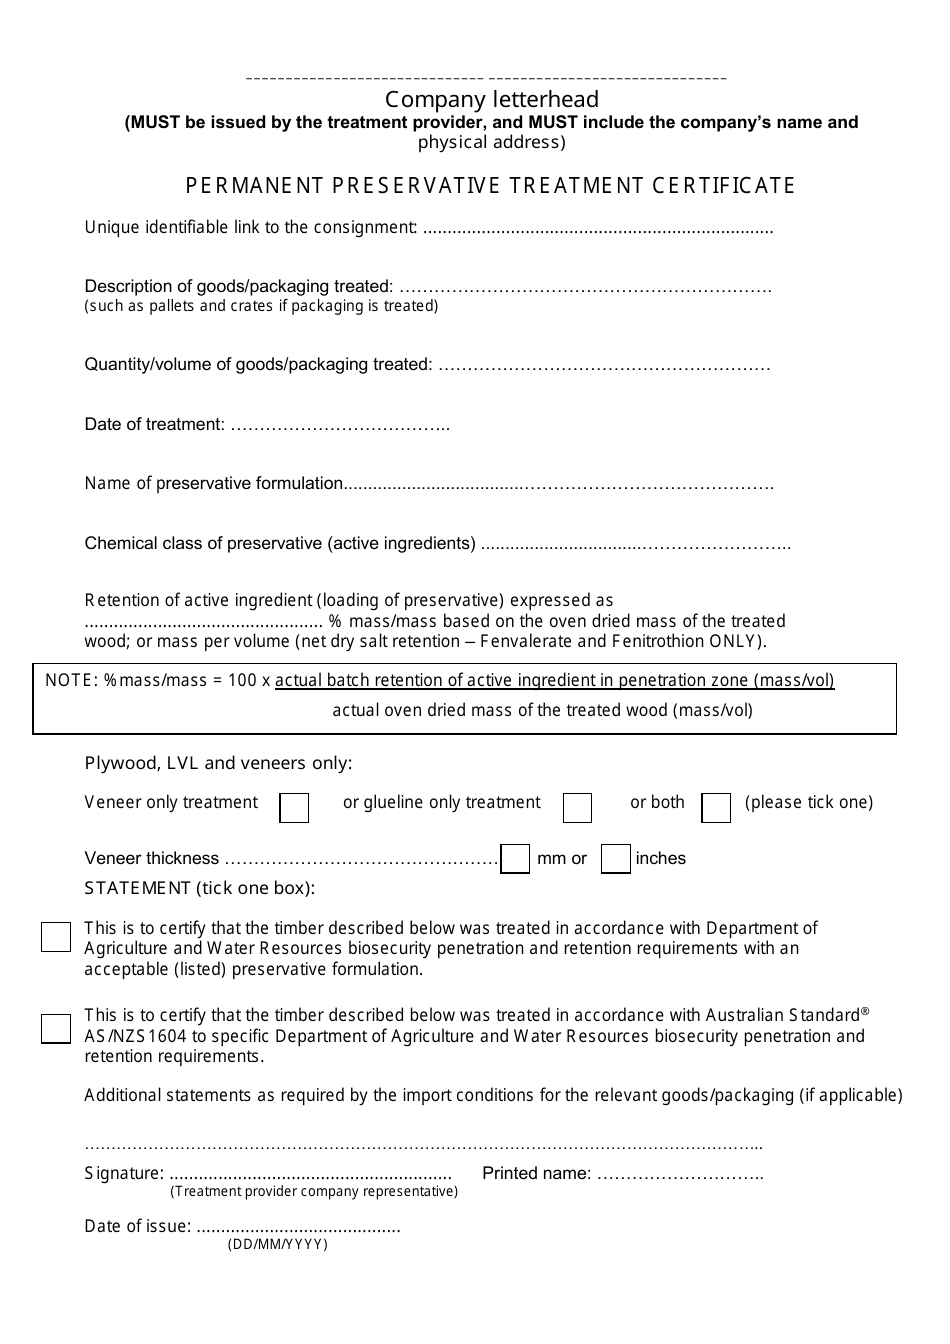 Permanent Preservative Treatment Certificate Form - Australia, Page 1